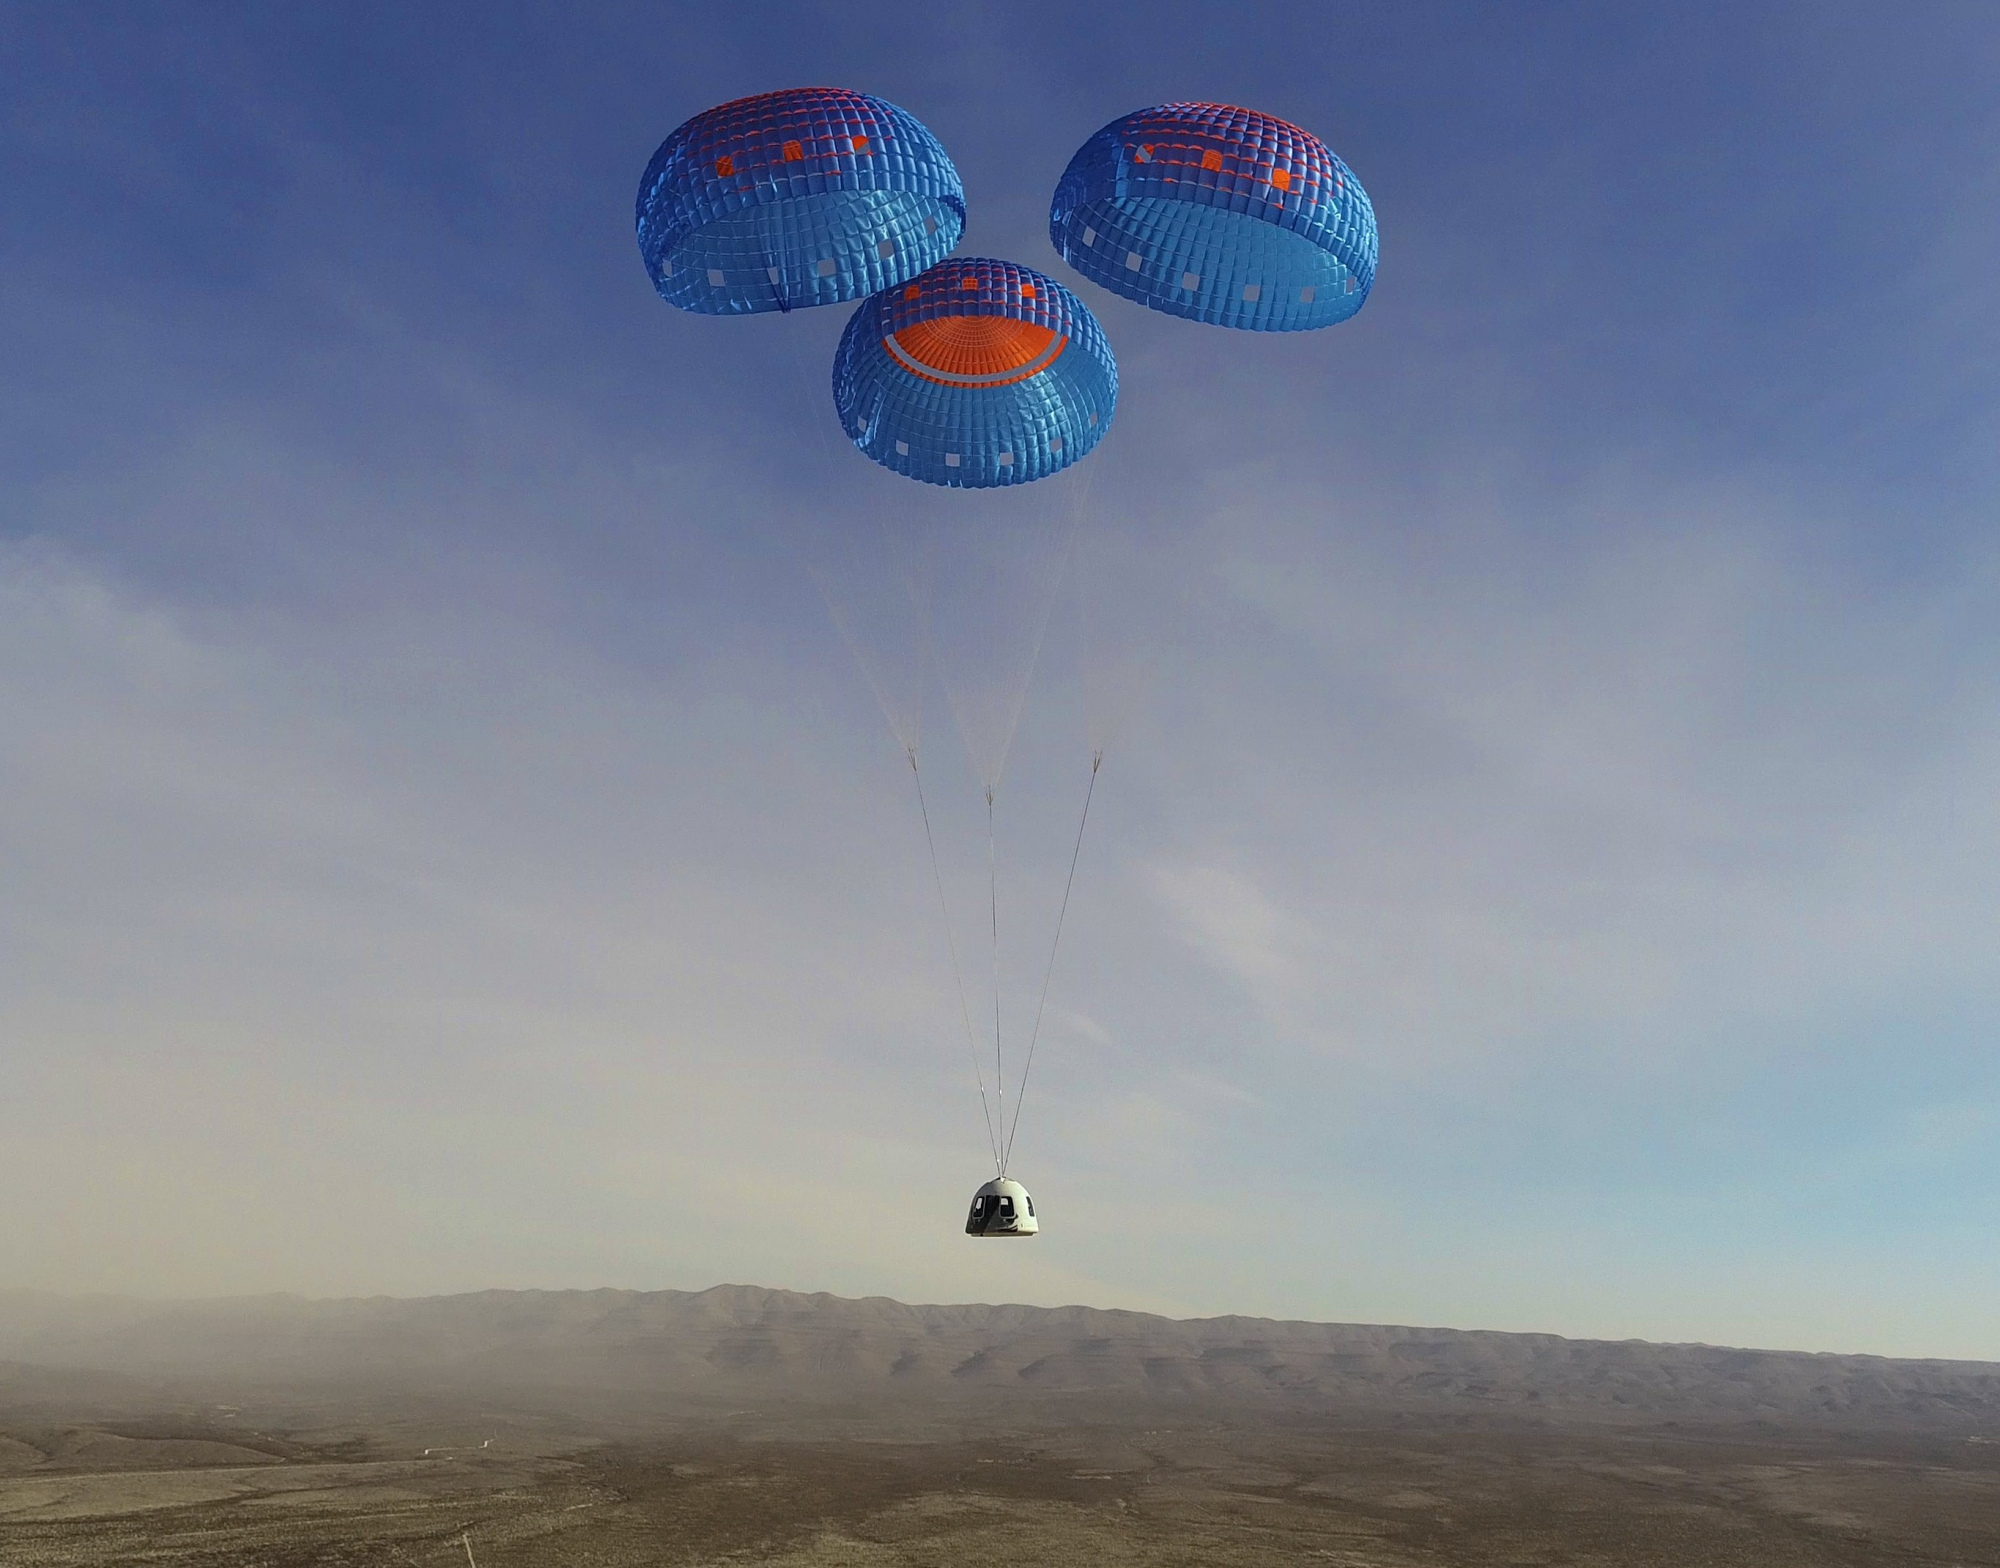 NewShepard_NS-14_2021-01-14_crew-capsule-parachutes.thumb.jpg.11fc135670de918424ec86baf6b6f7a0.jpg